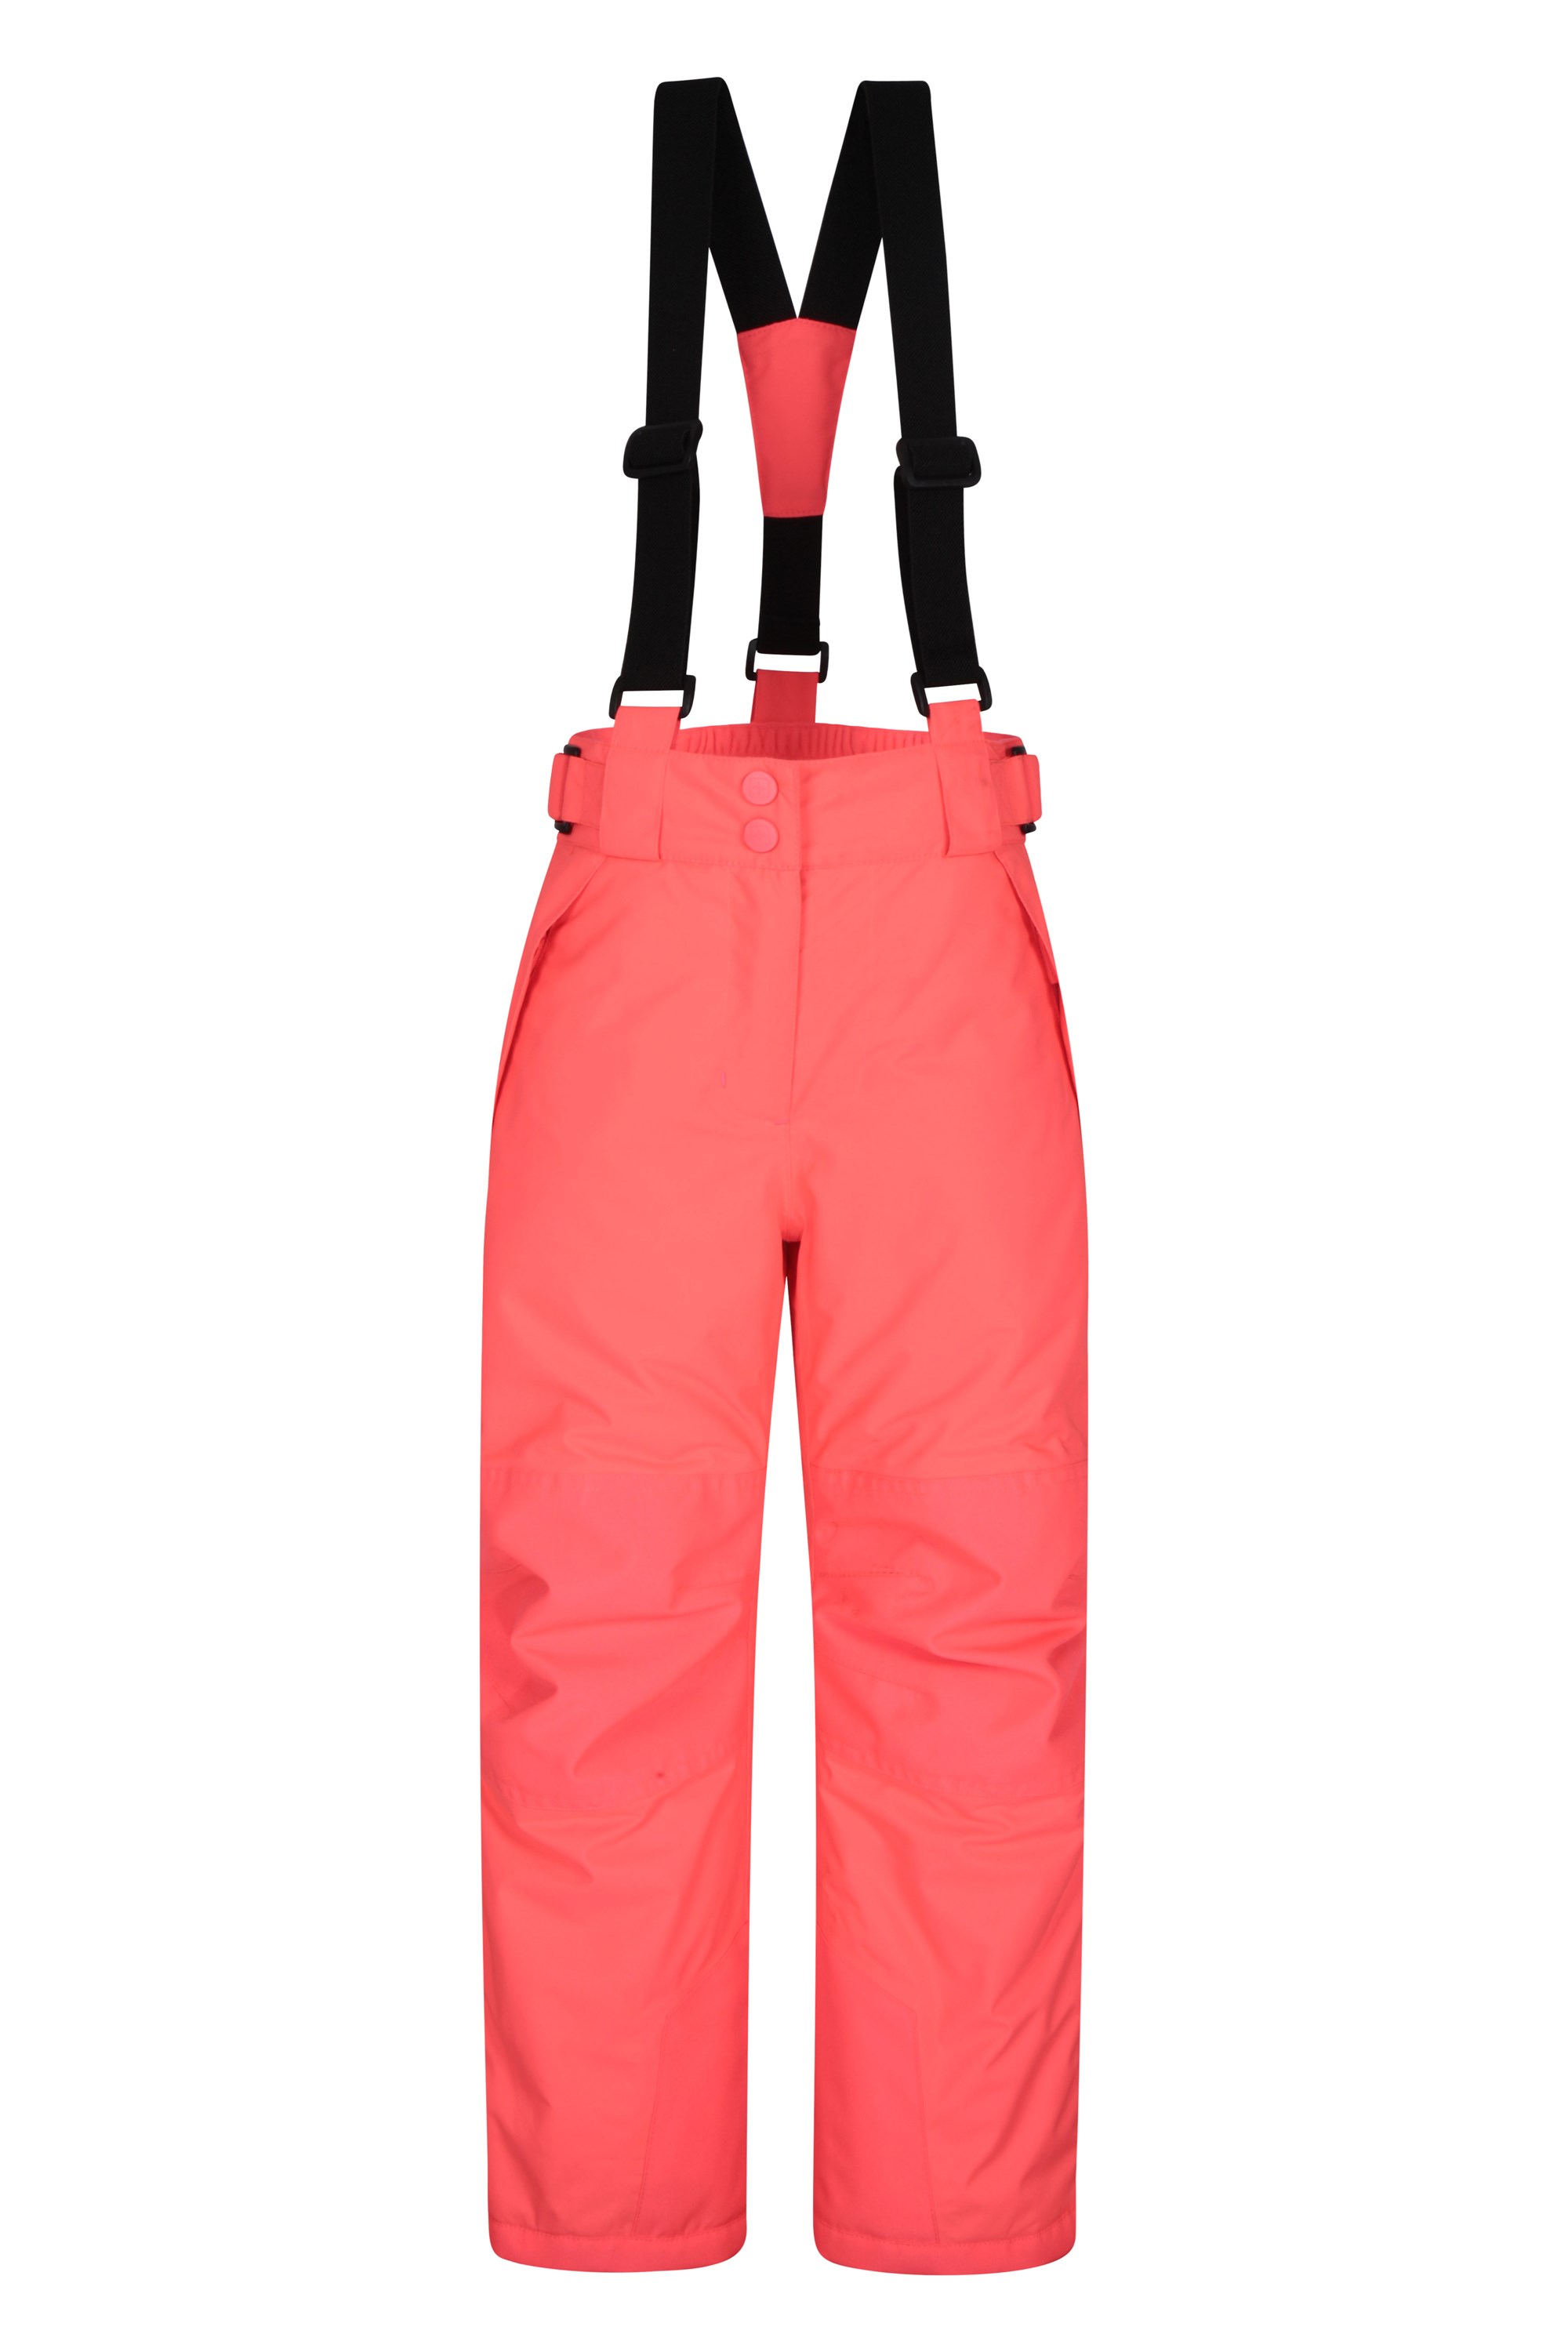 Pantalon de Ski Enfant Falcon Extreme - Rose